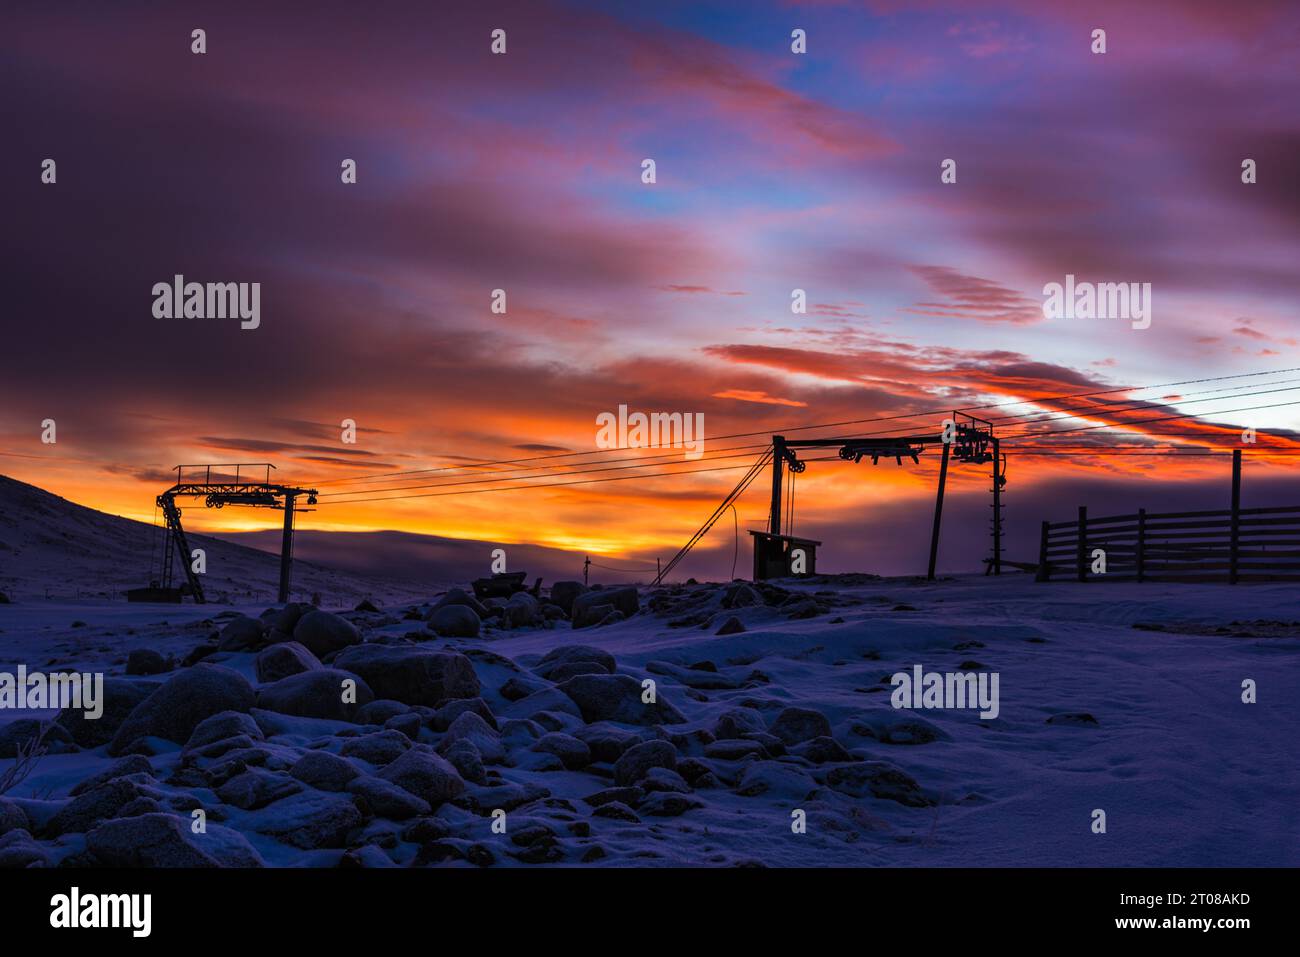 A serene winter sunrise in Swedish ski resort. Stock Photo